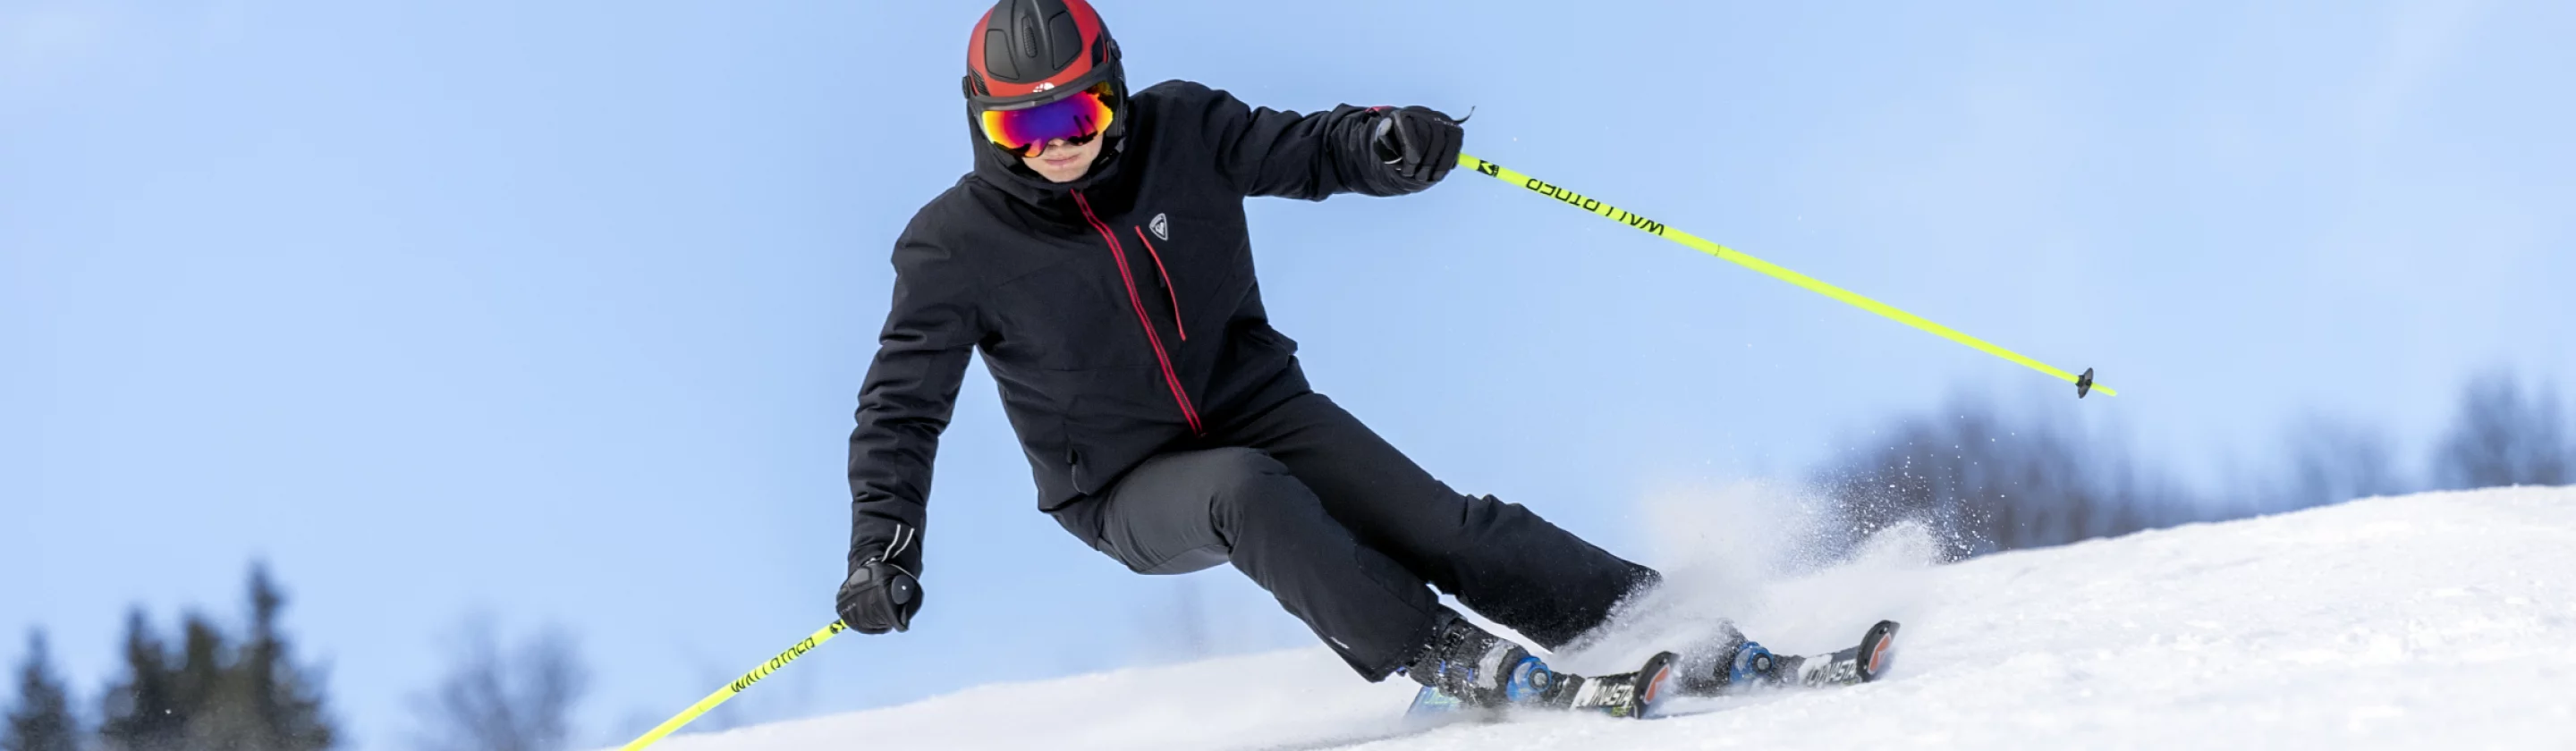 Legging (sous-vêtements ski) - HORS PISTE